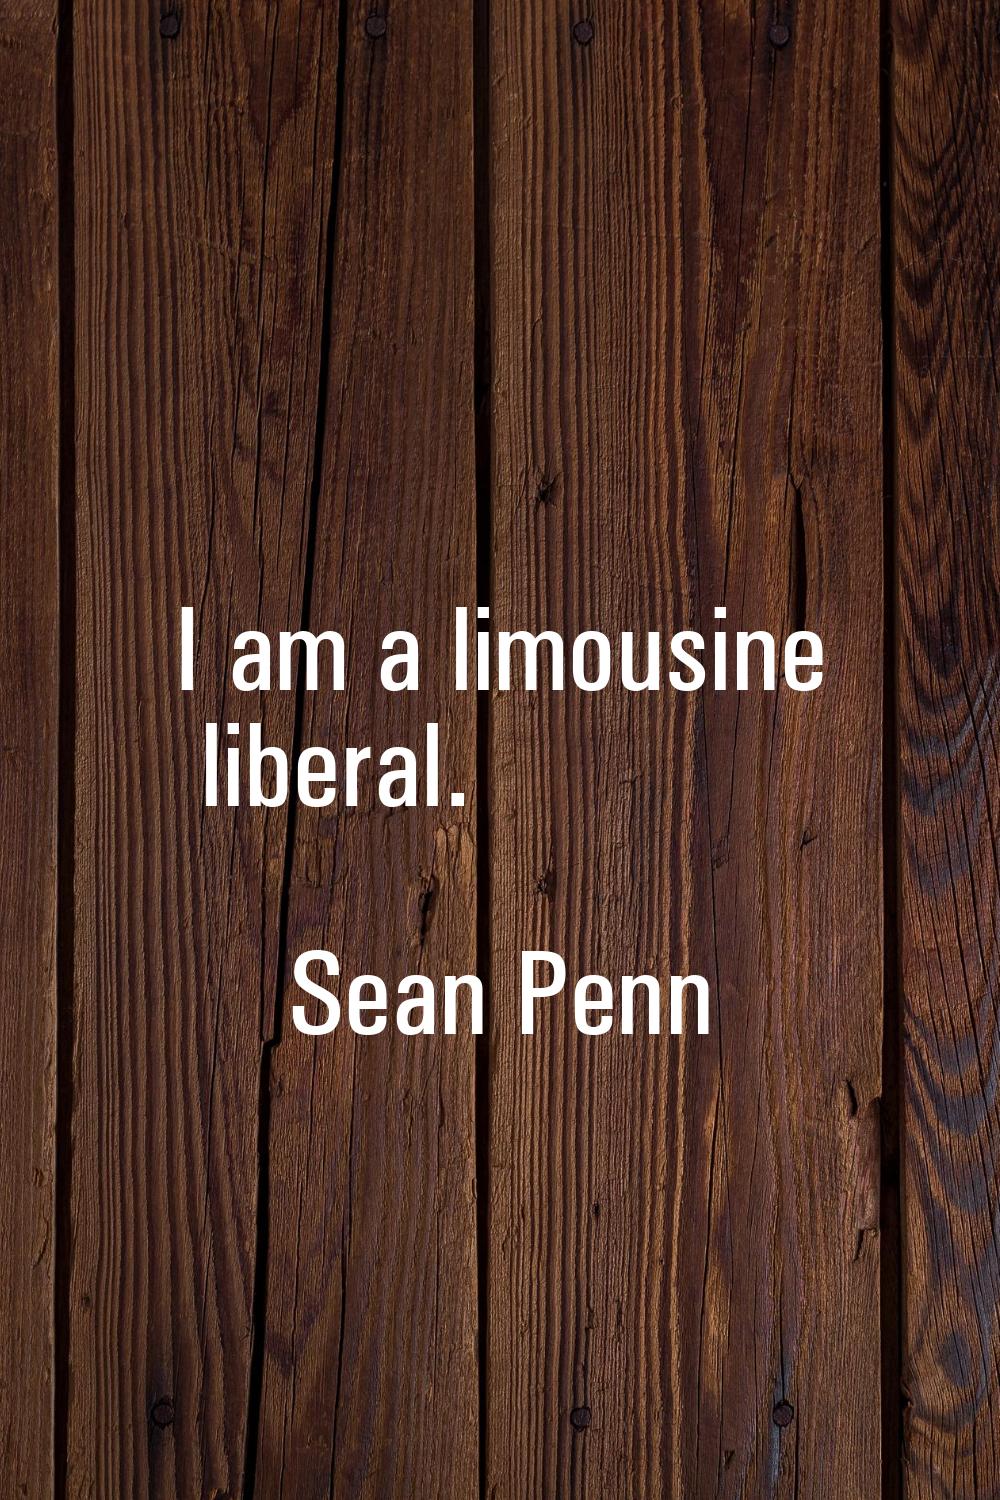 I am a limousine liberal.